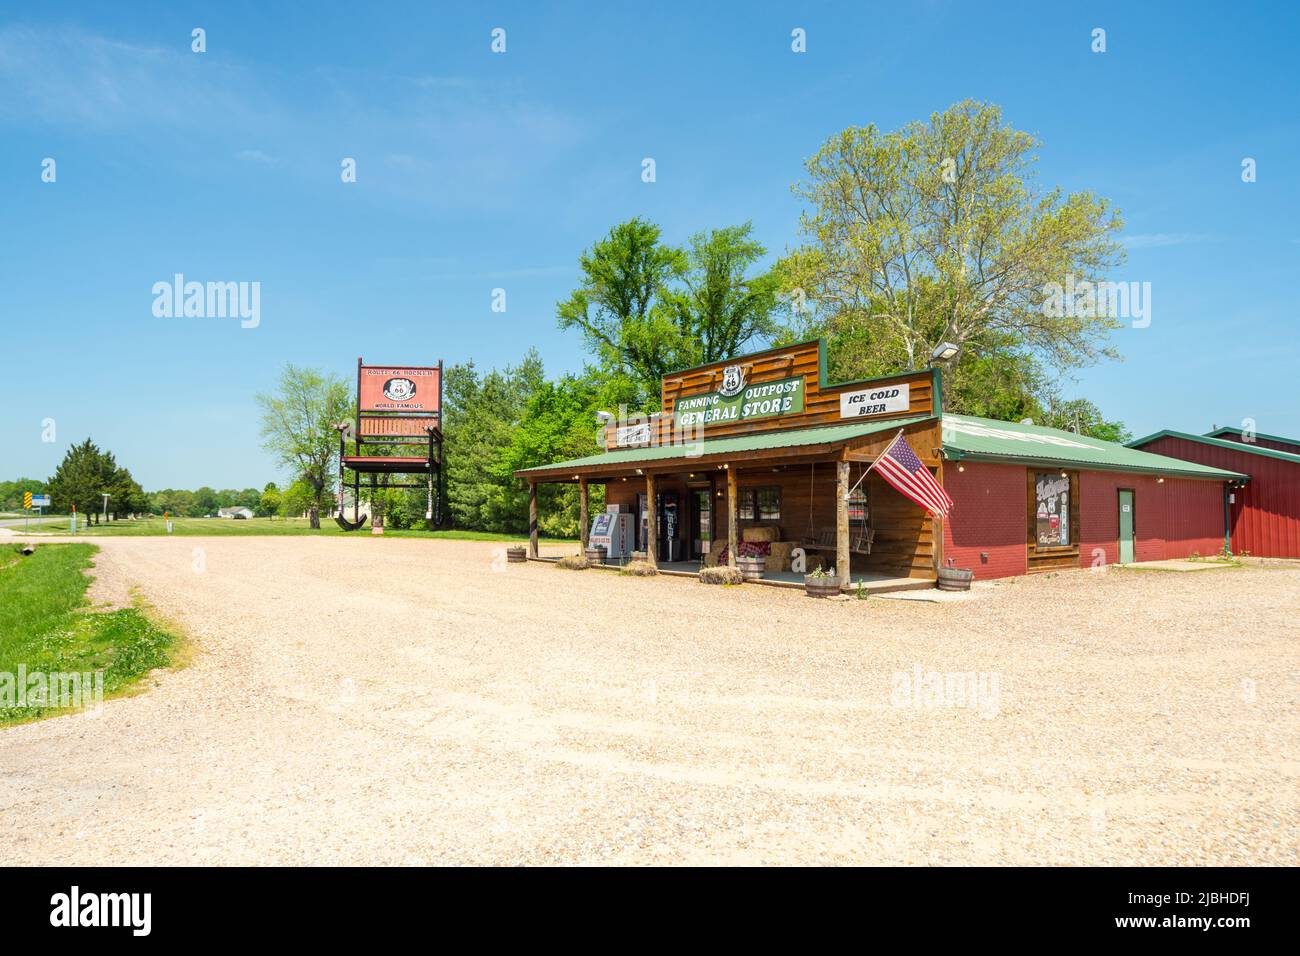 Weltberühmter Route 66 Rocker, Fanning Outpost und General Store, Fanning, Missouri MO, USA Stockfoto